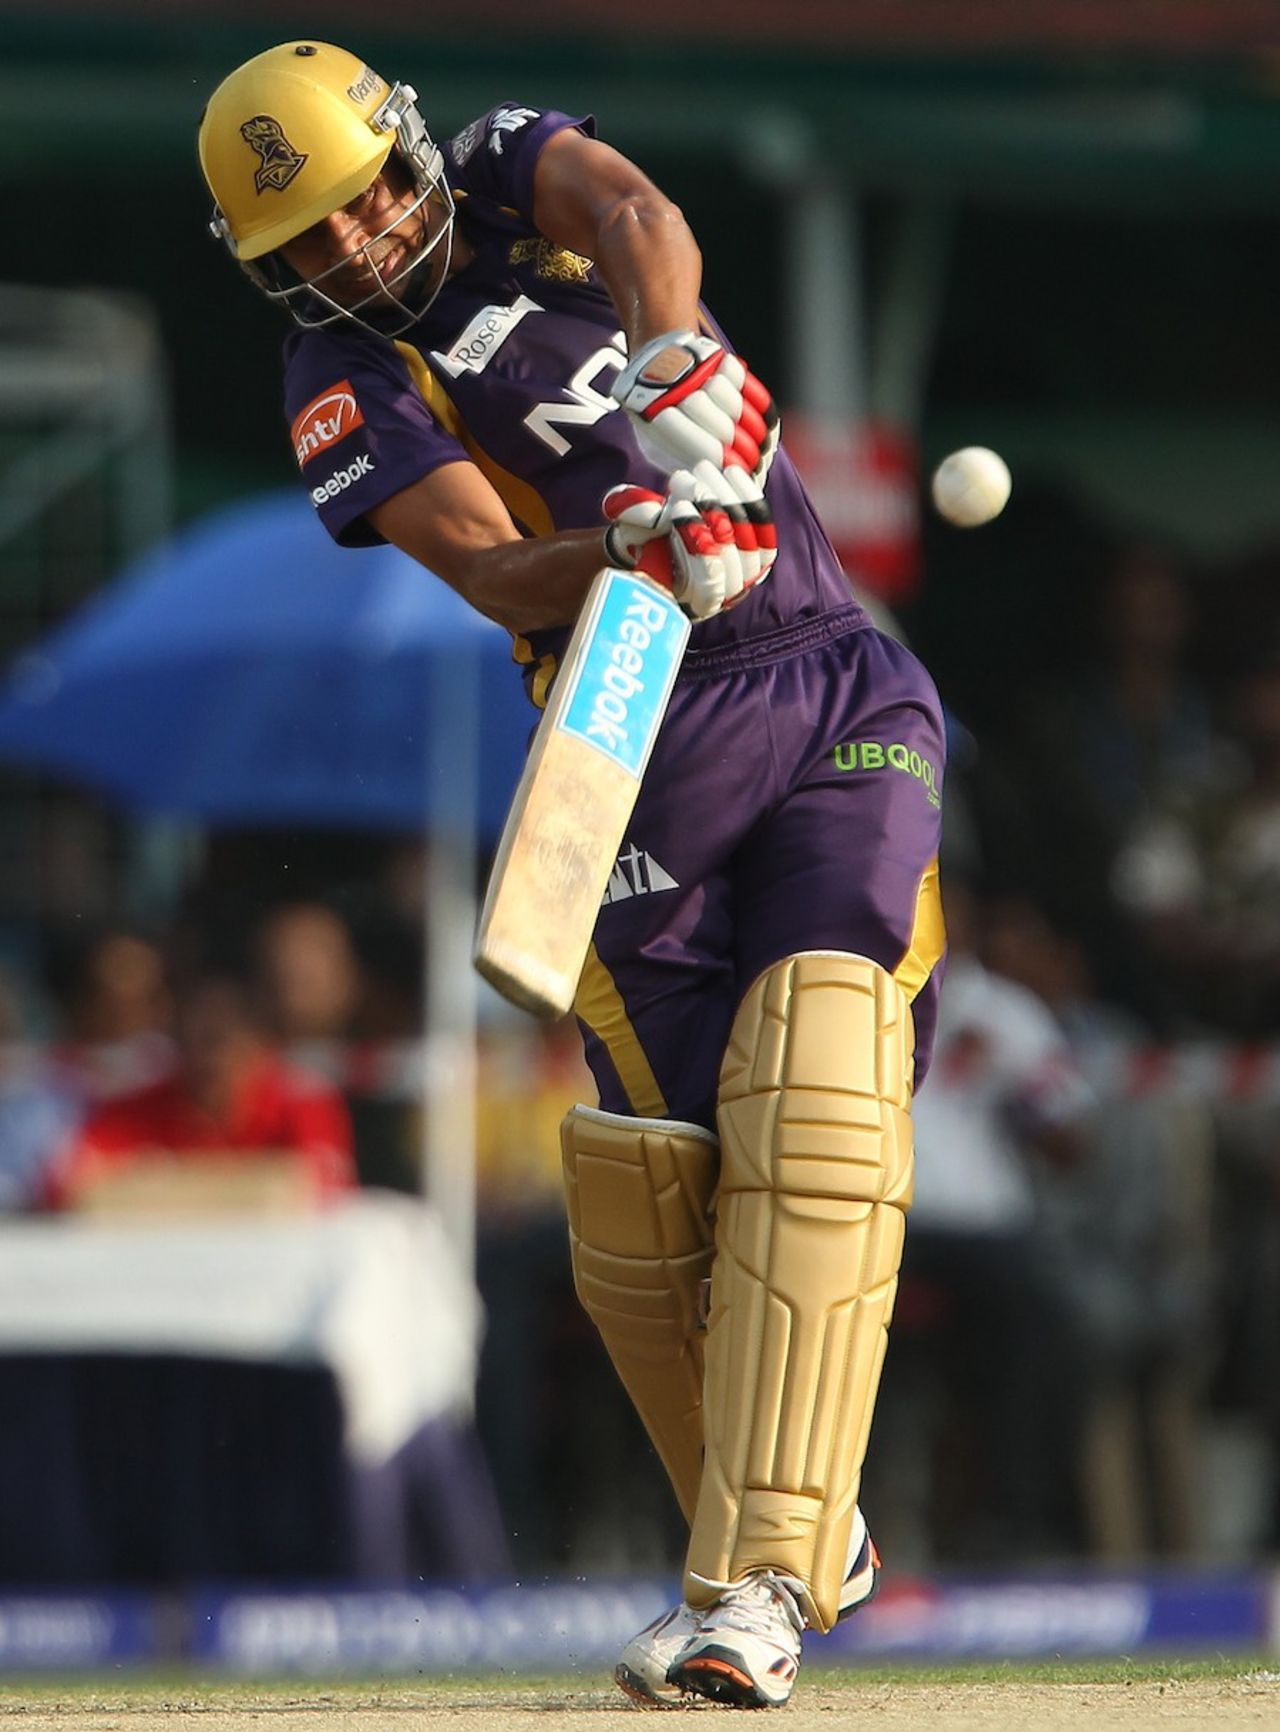 Manvinder Bisla pulls during his innings of 28, Kolkata Knight Riders v Sunrisers Hyderabad, IPL, Kolkata, April 14, 2013